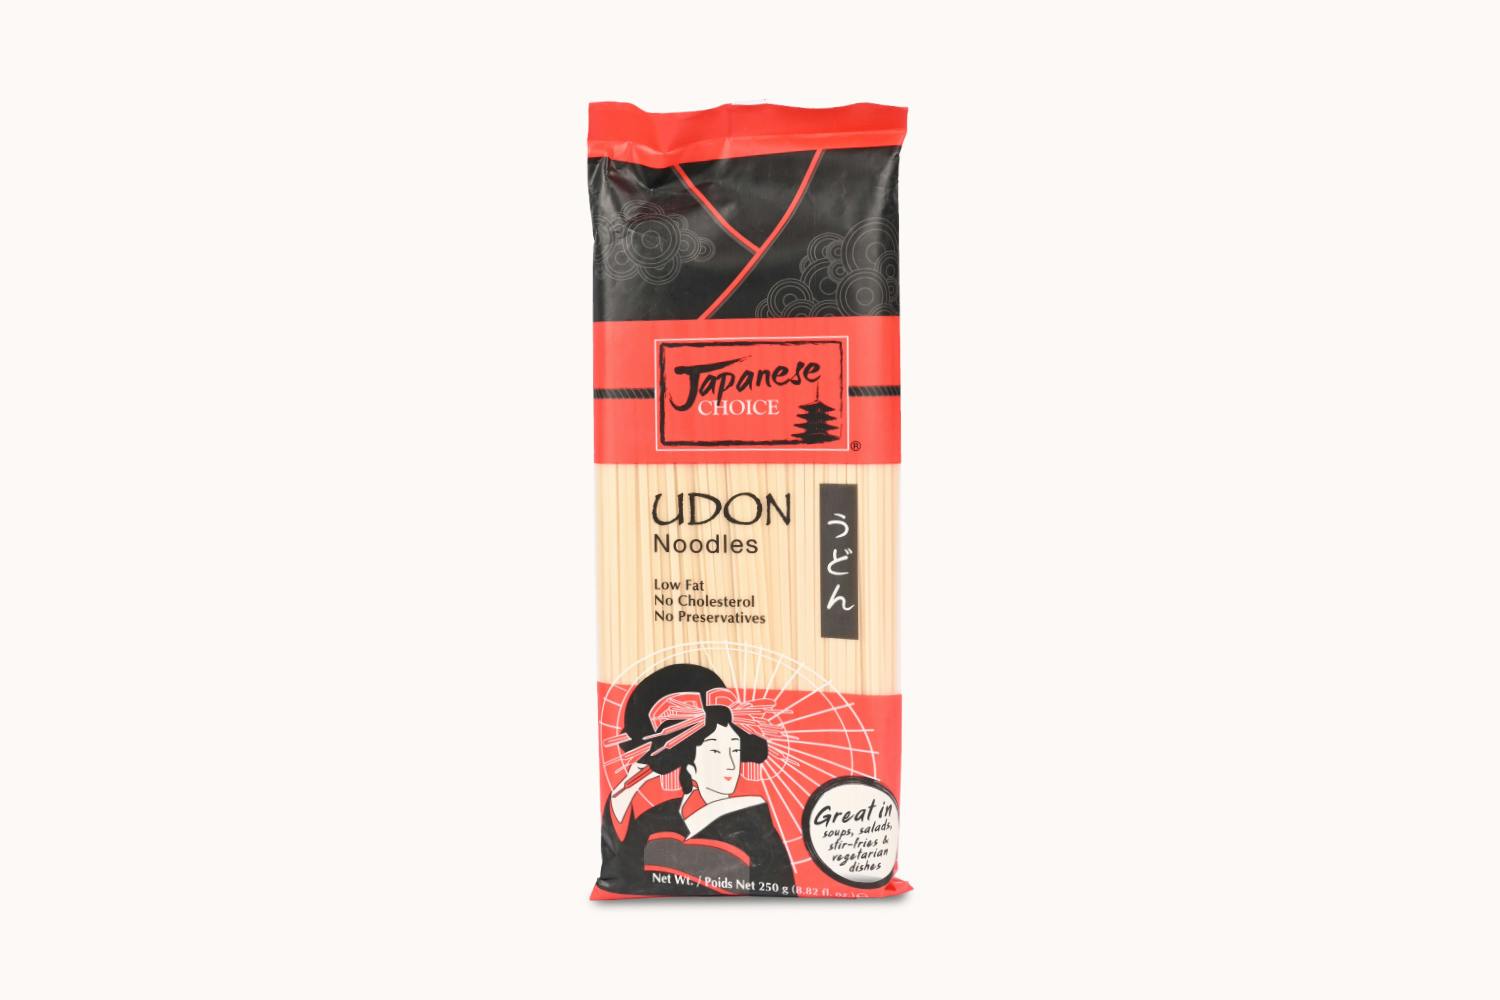 Japanese Choice Udon Noodles